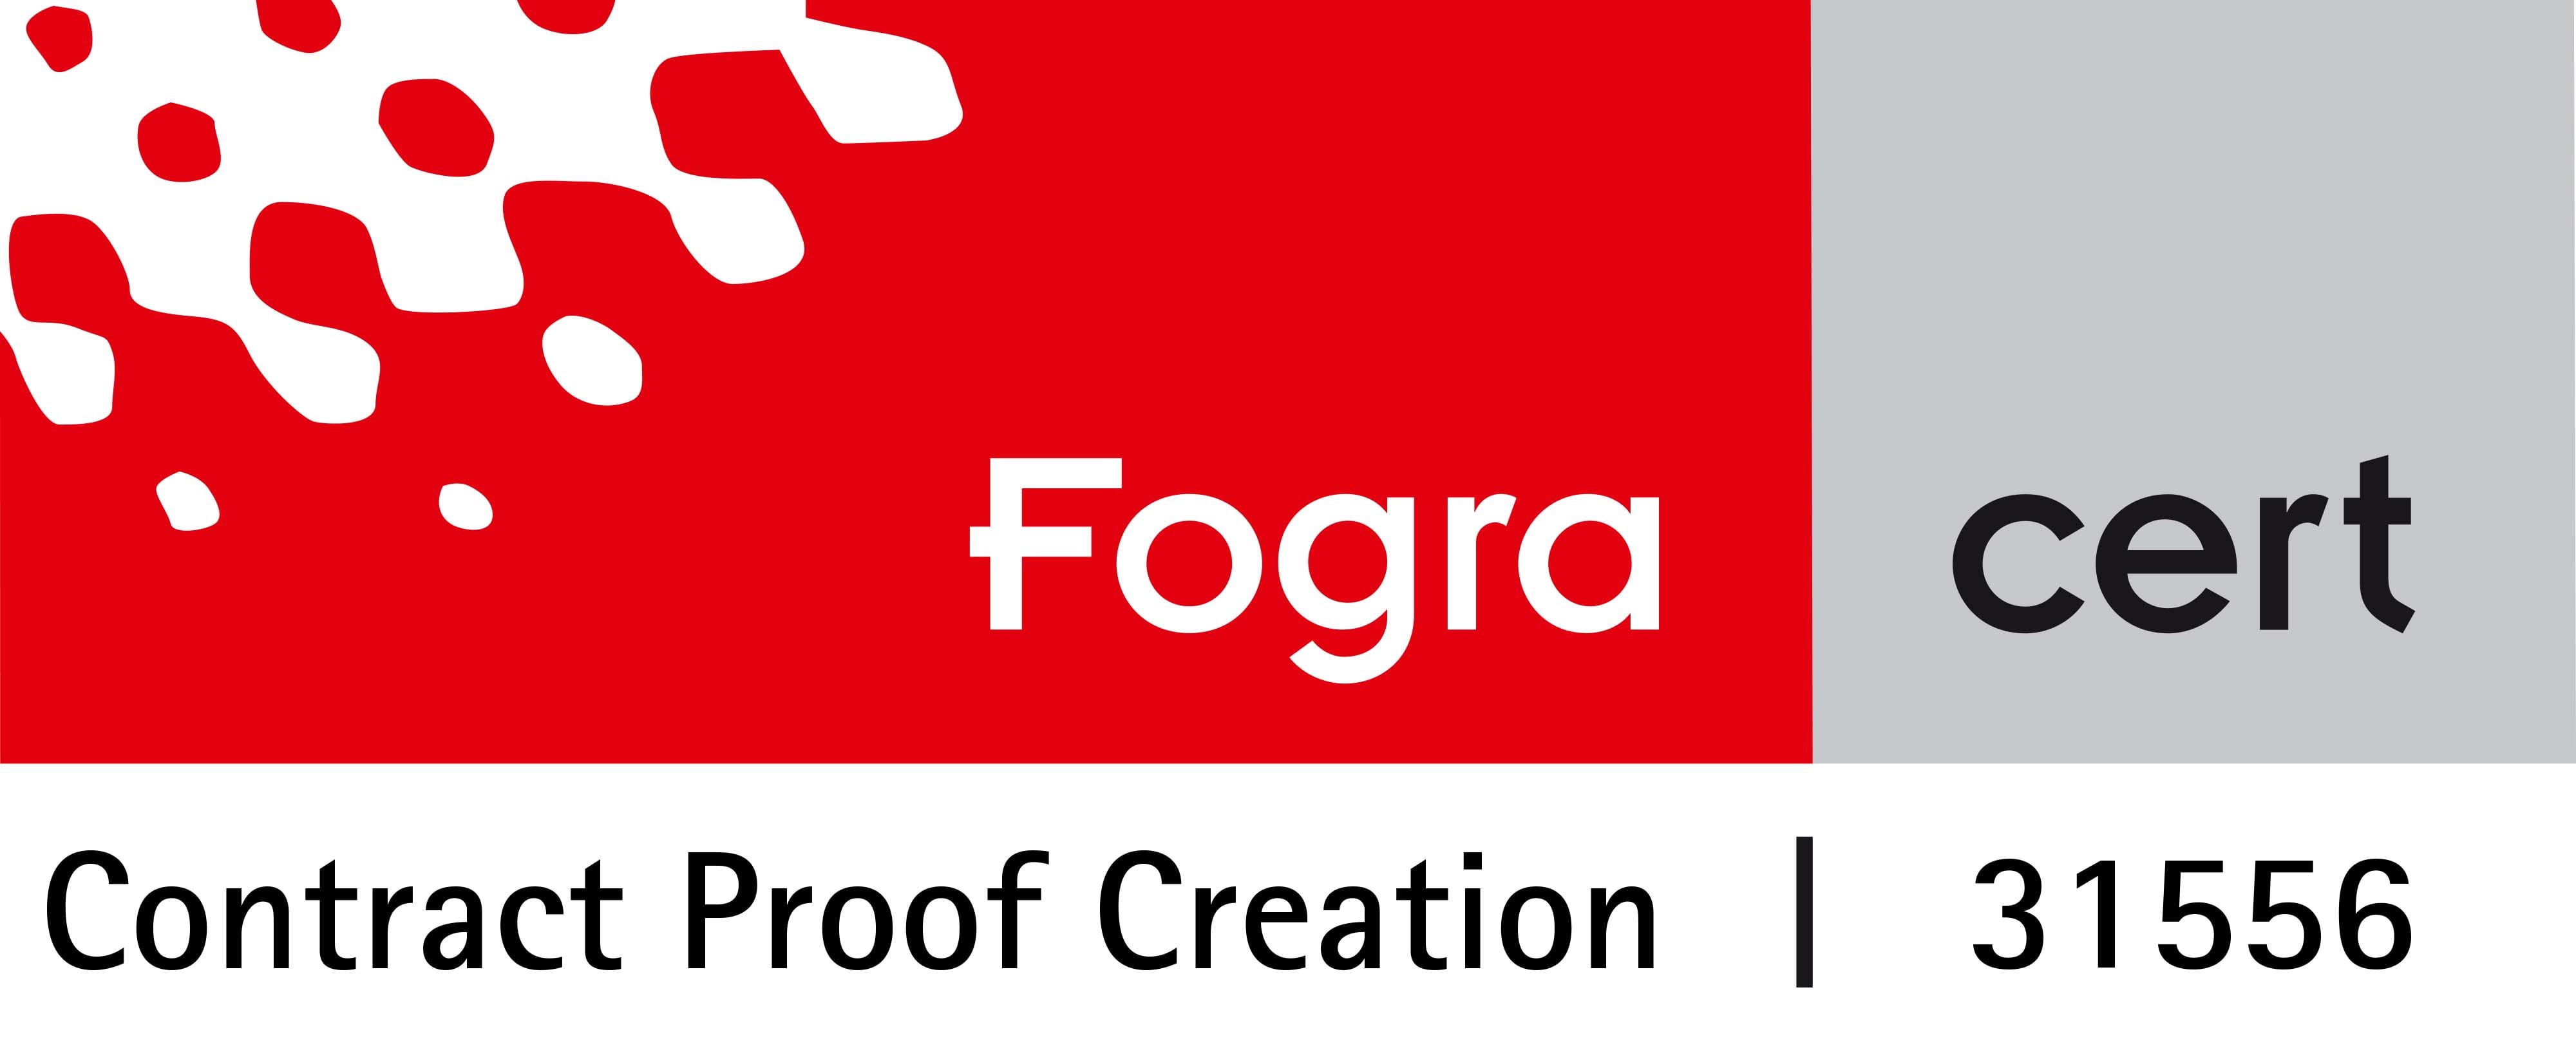 Proof GmbH Fogra Cert Logo 2017 Création d'épreuves contractuelles